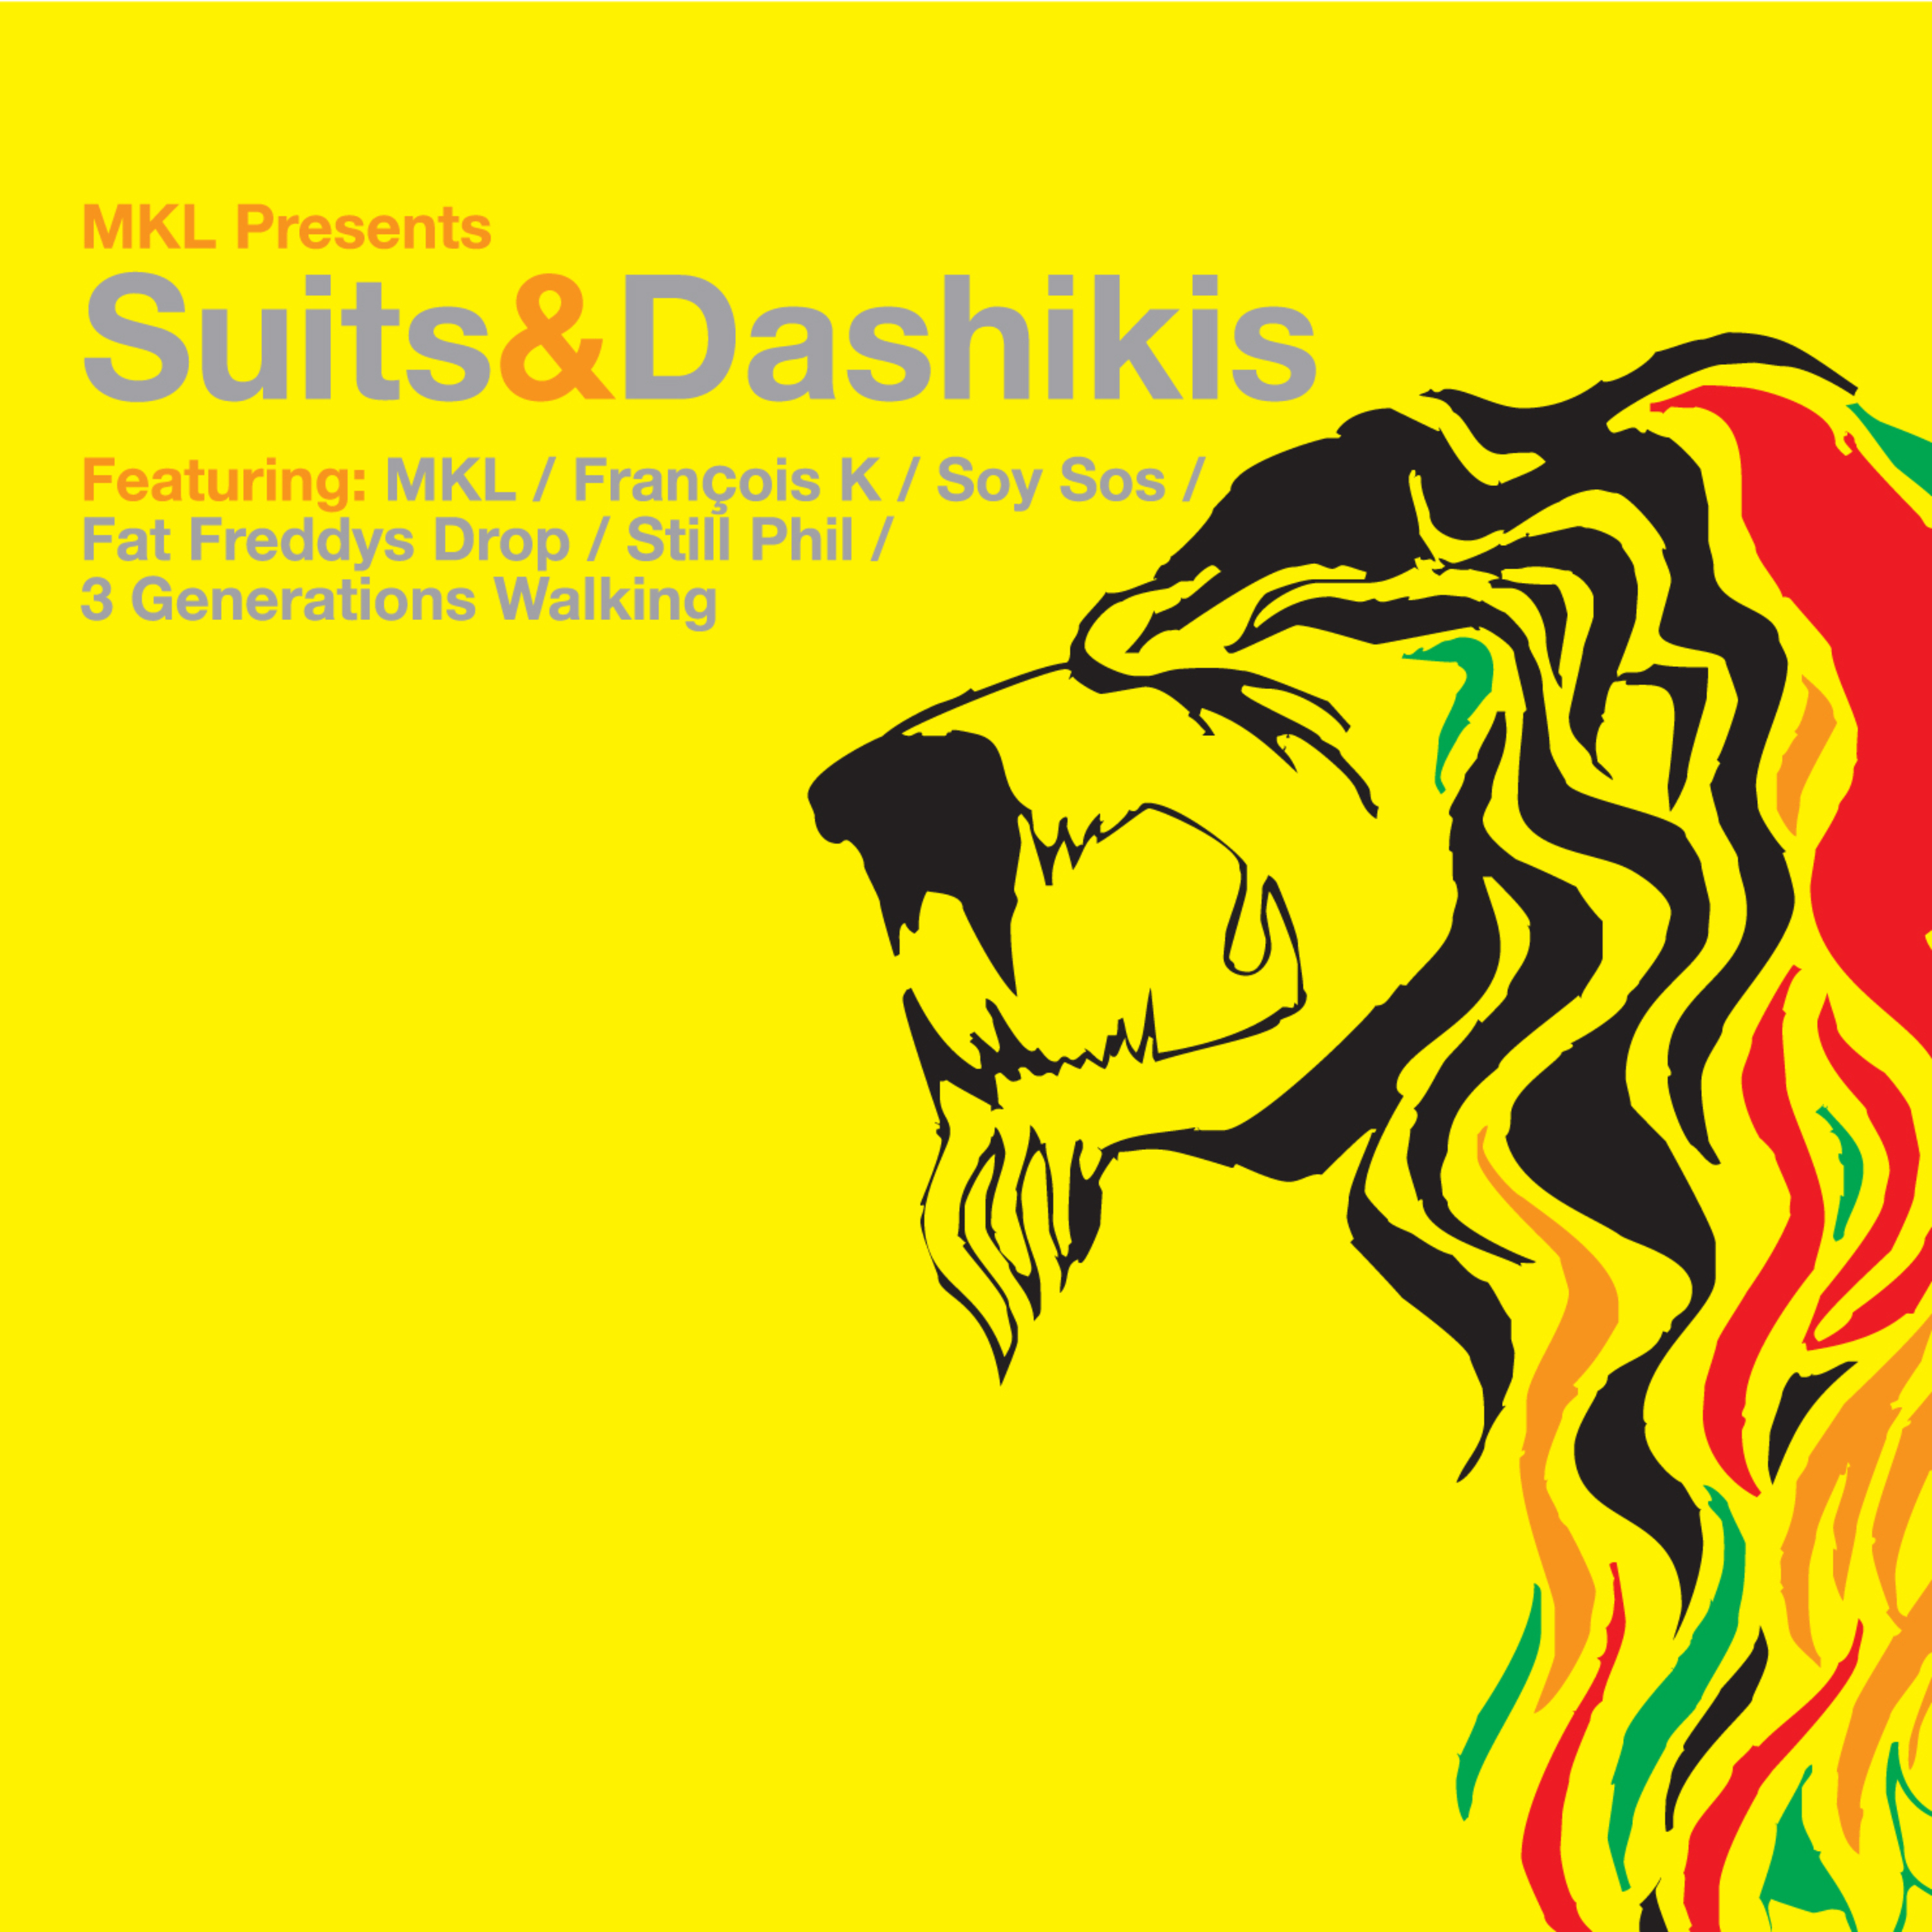 MKL pres. Suits & Dashikis